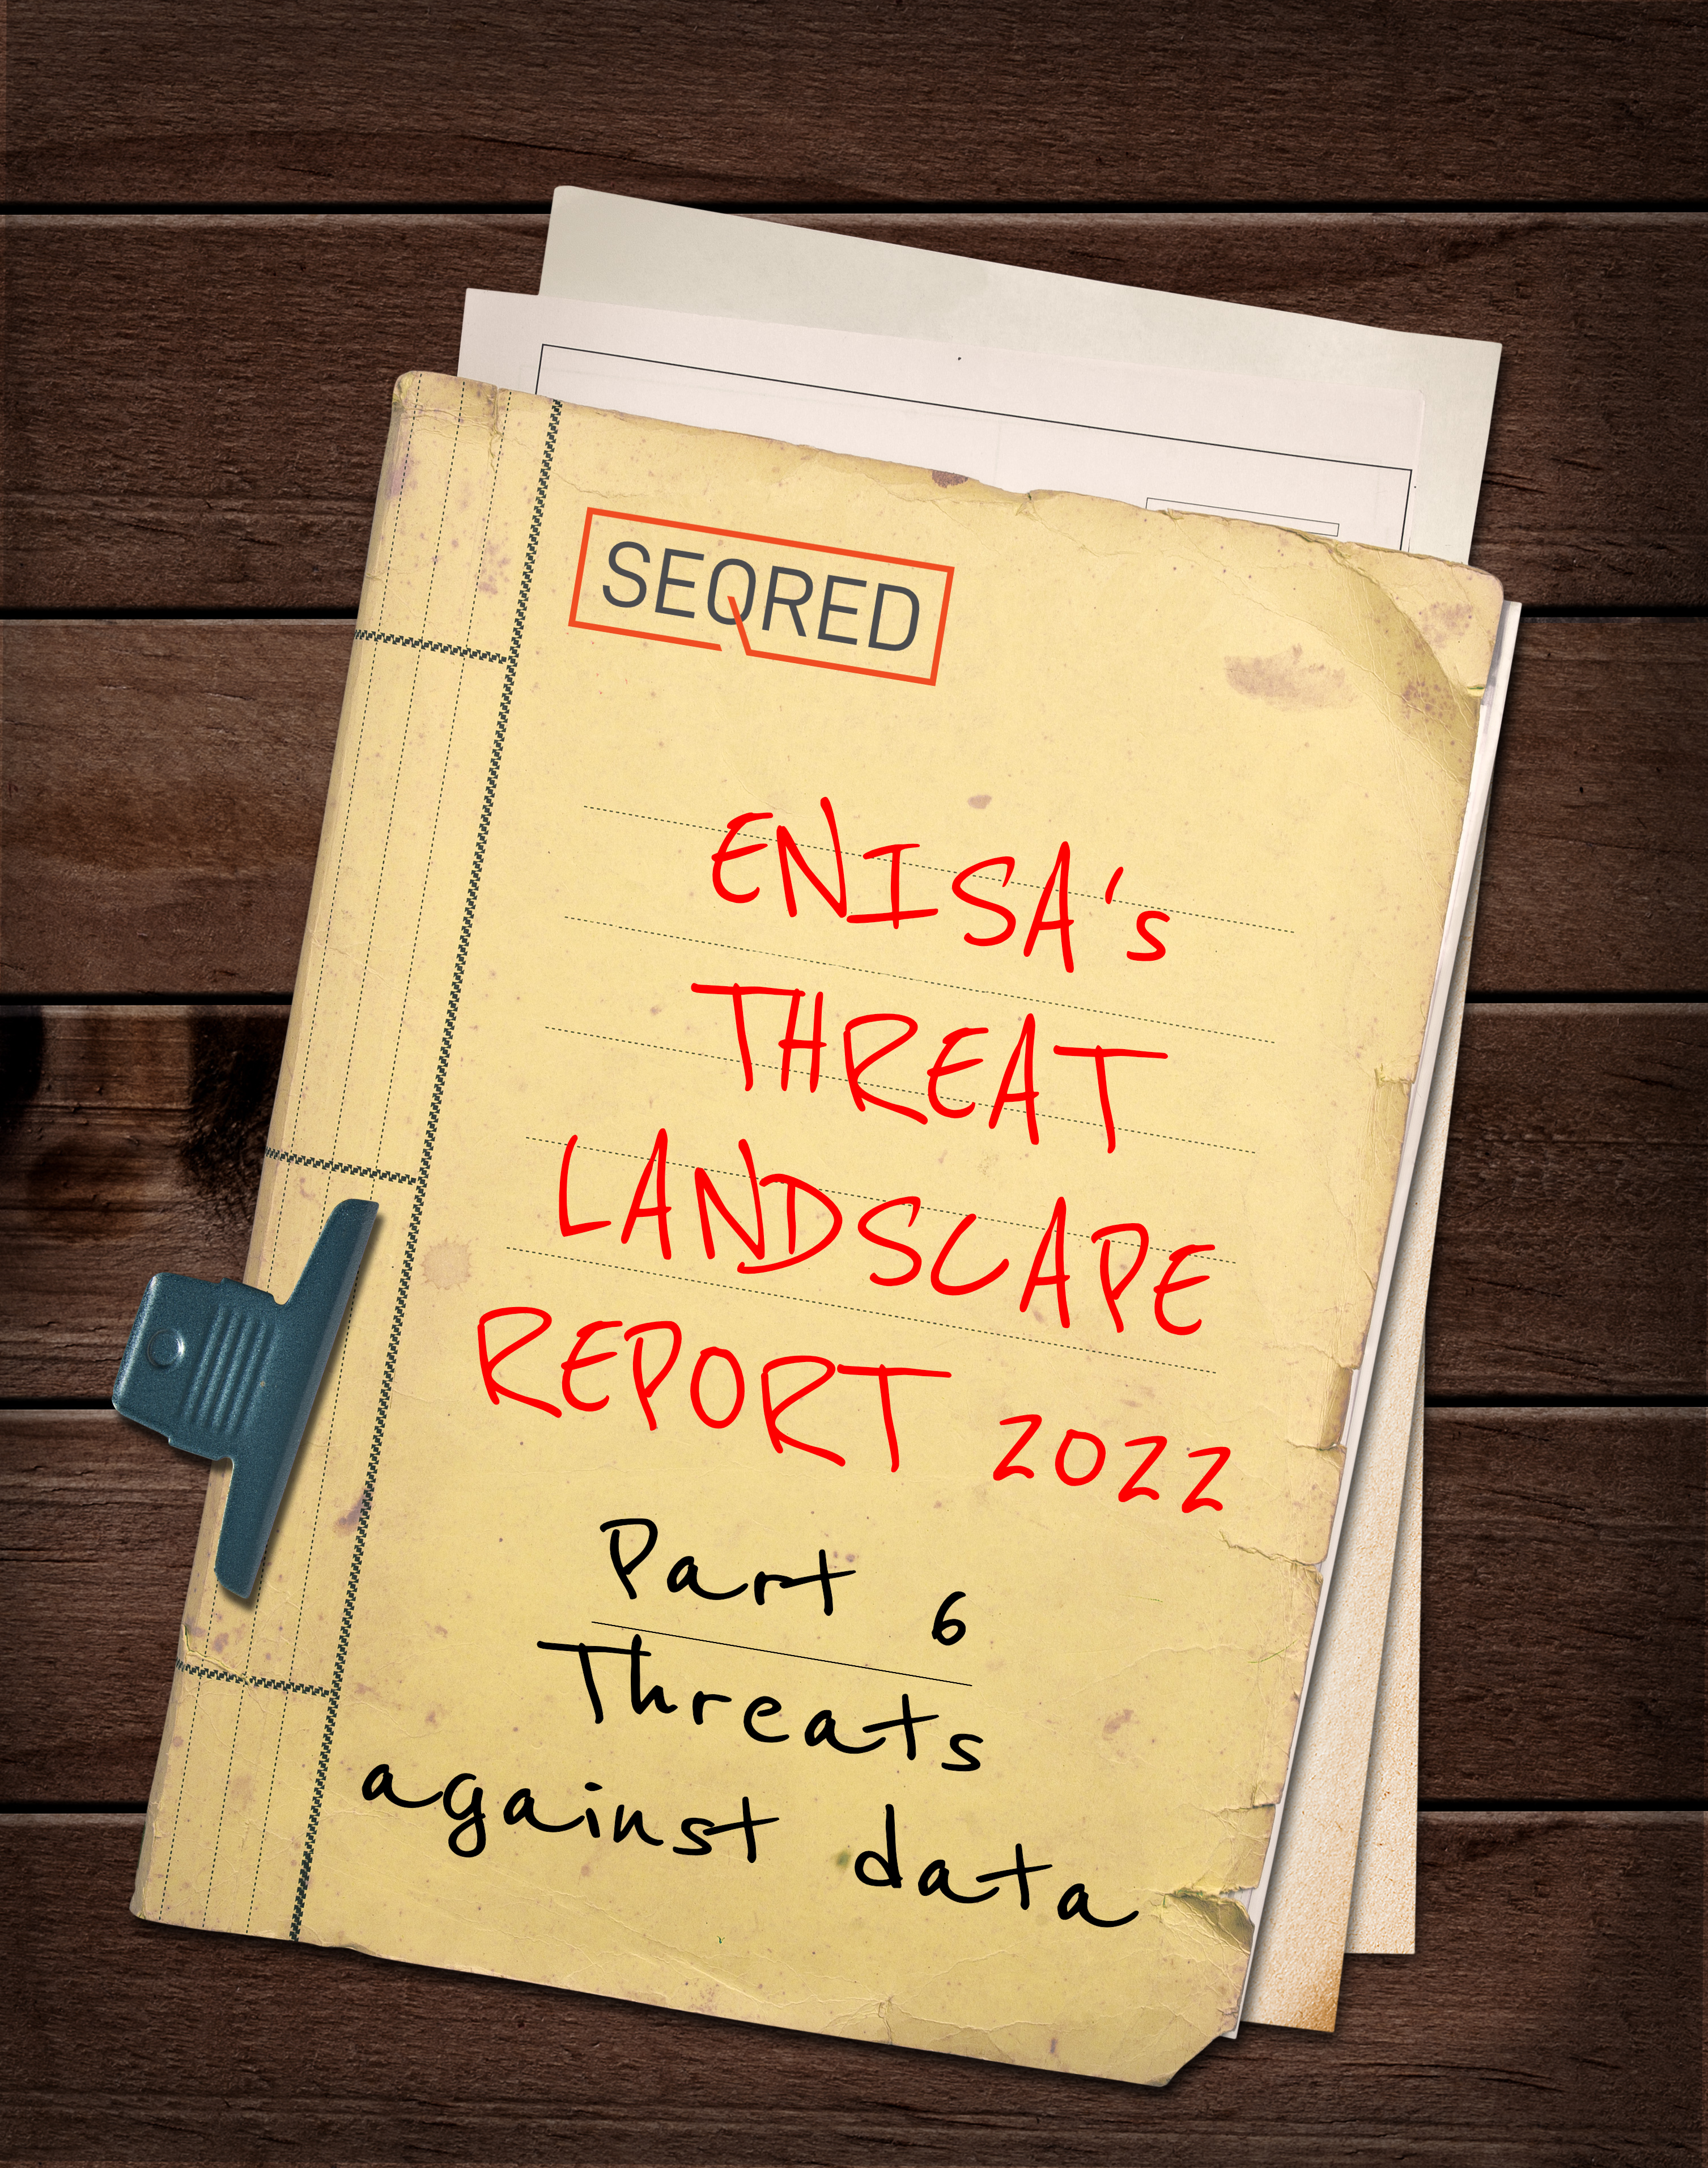 ENISA's Threat Landscape Report 2022 - Part 6 - Threats Against Data